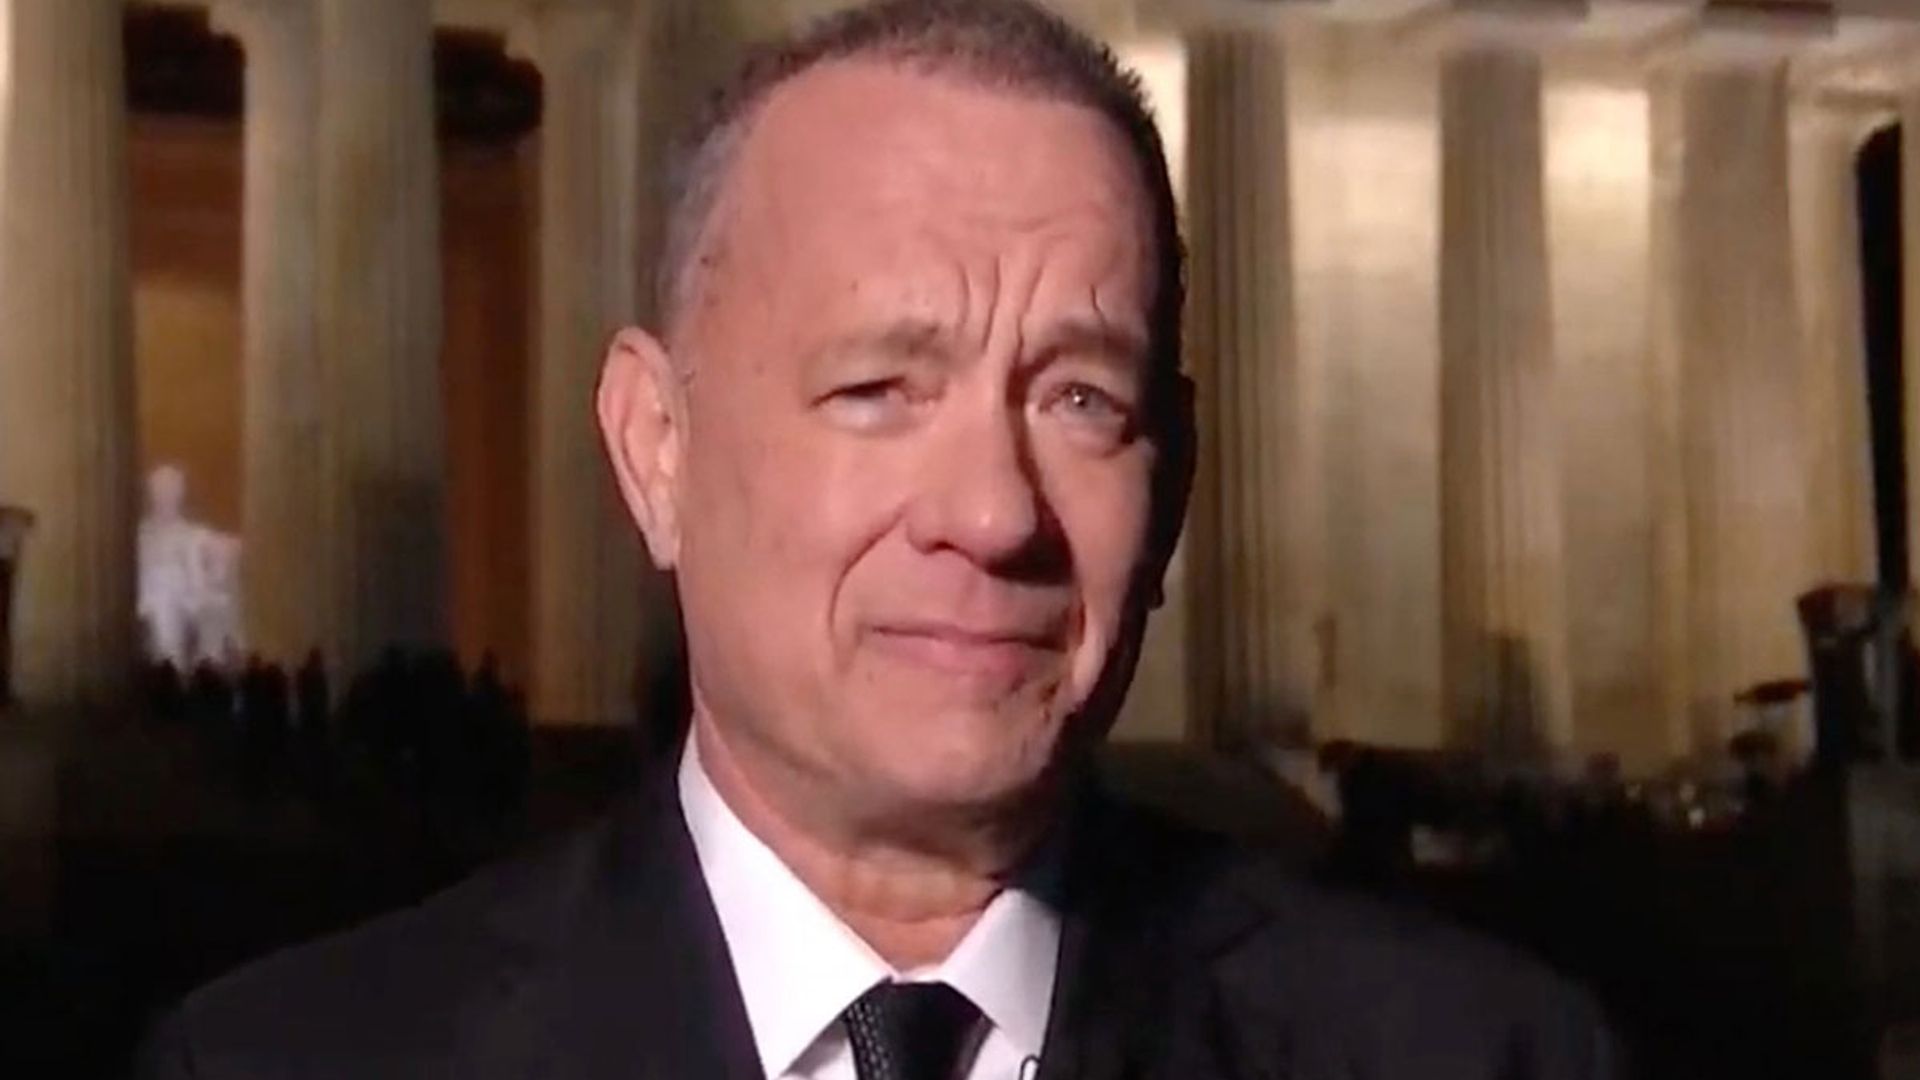 Tom Hanks in tears during emotional tribute following heartbreaking loss